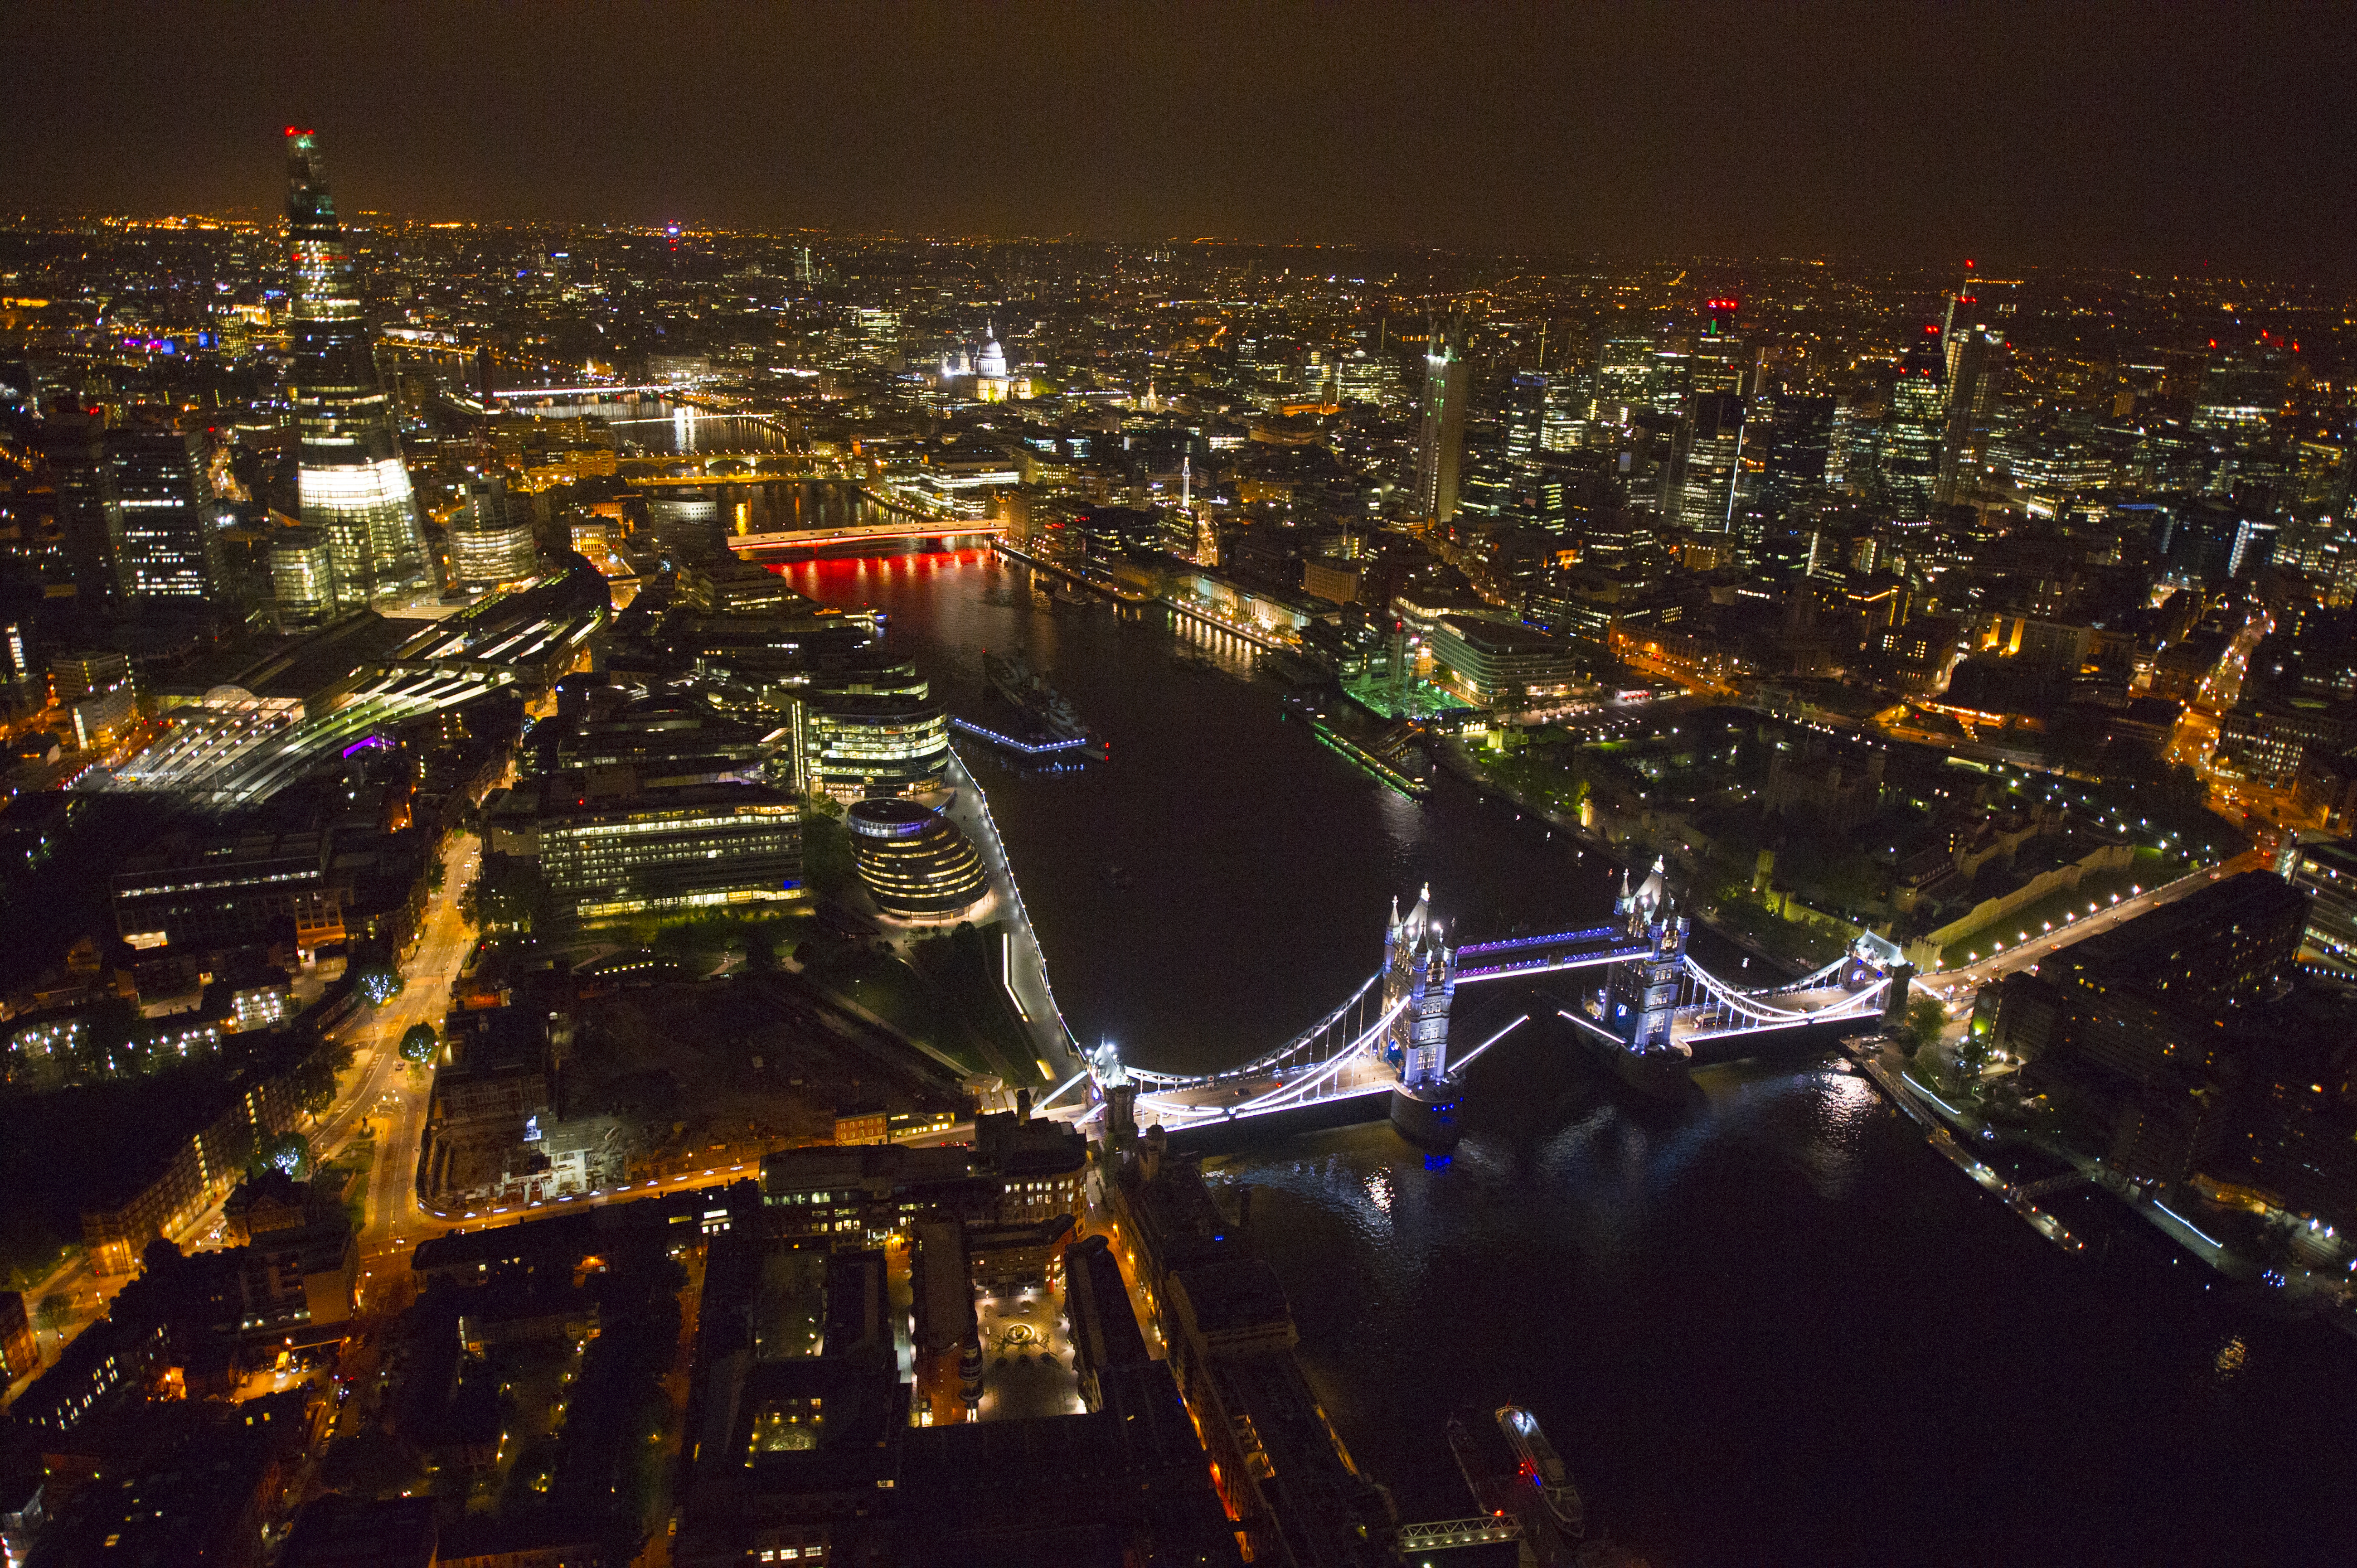  Aerial Photo of London Taken At Night For Your Desktop Wallpaper